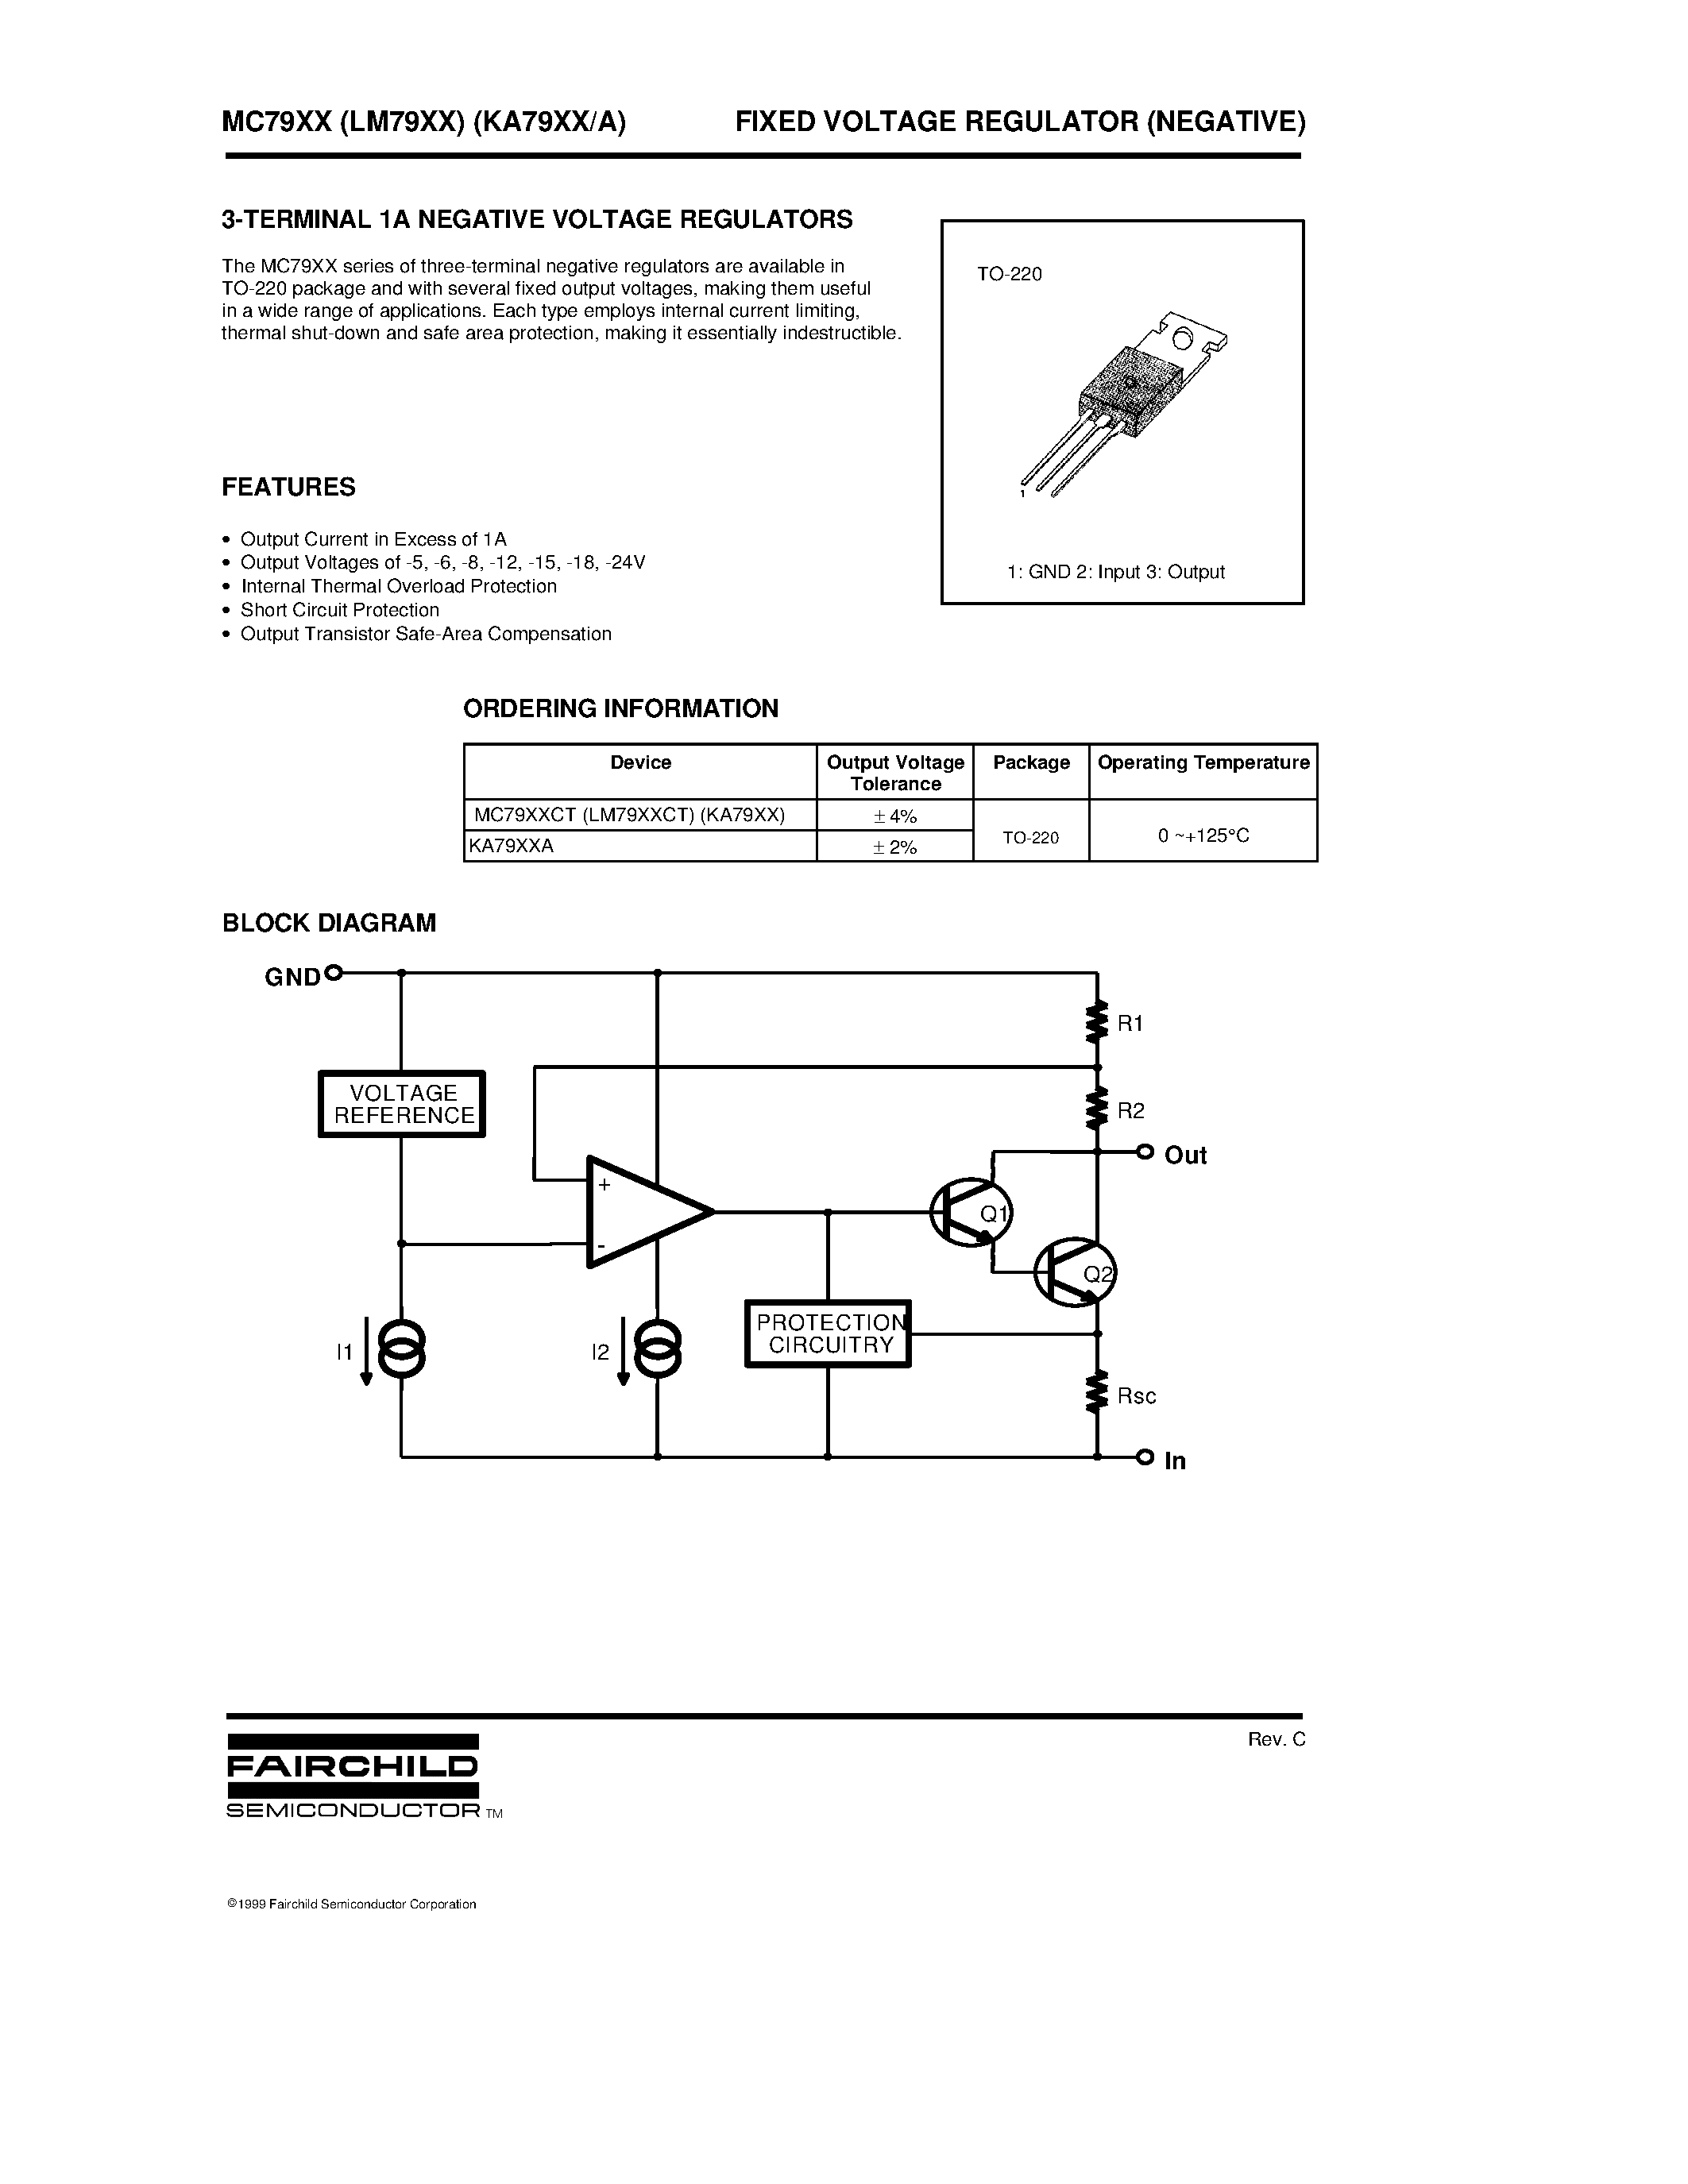 Datasheet MC79XX - 3-TERMINAL 1A NEGATIVE VOLTAGE REGULATORS page 1